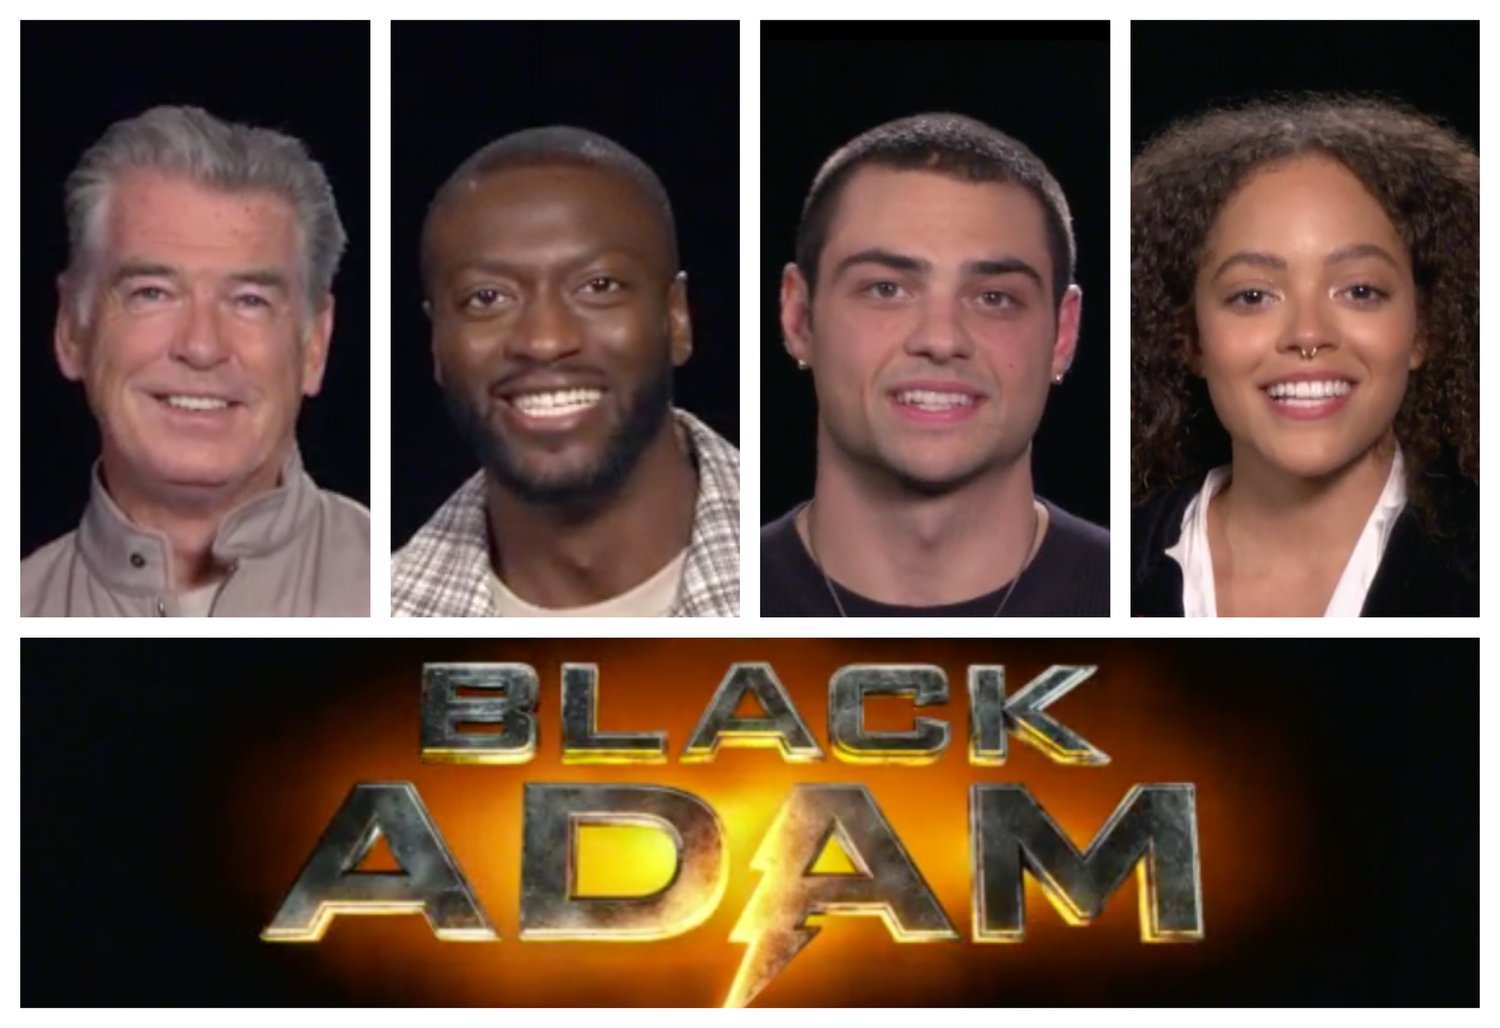 Black Adam Cast Interviews (Pierce Brosnan, Aldis Hodge, Noah Centineo,  Quintessa Swindell) 